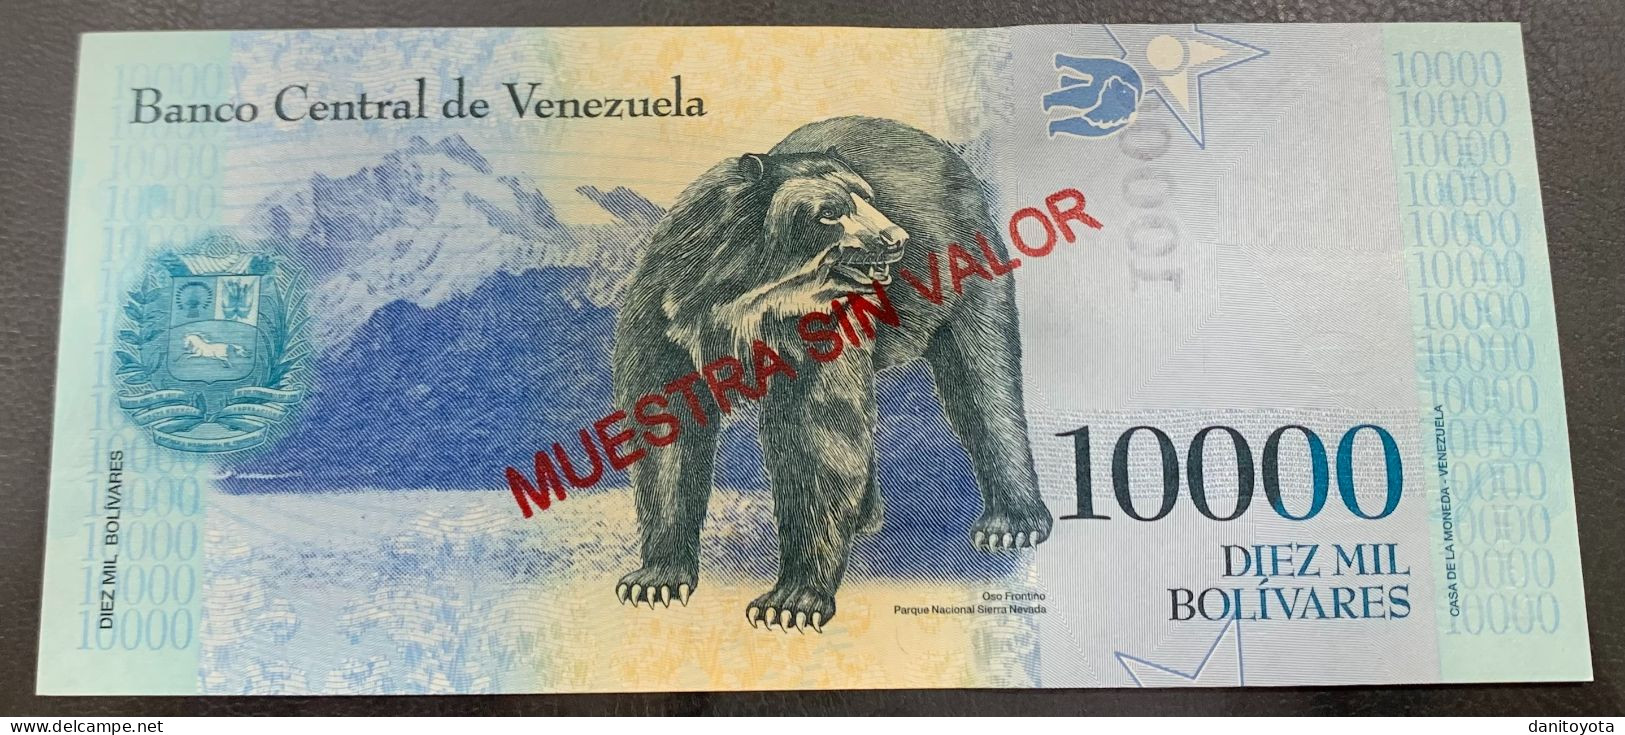 VENEZUELA. 10000 BOLIVARES 18 AGOSTO 2016. SOBRECARGA "MUESTRA SIN VALOR". - Venezuela